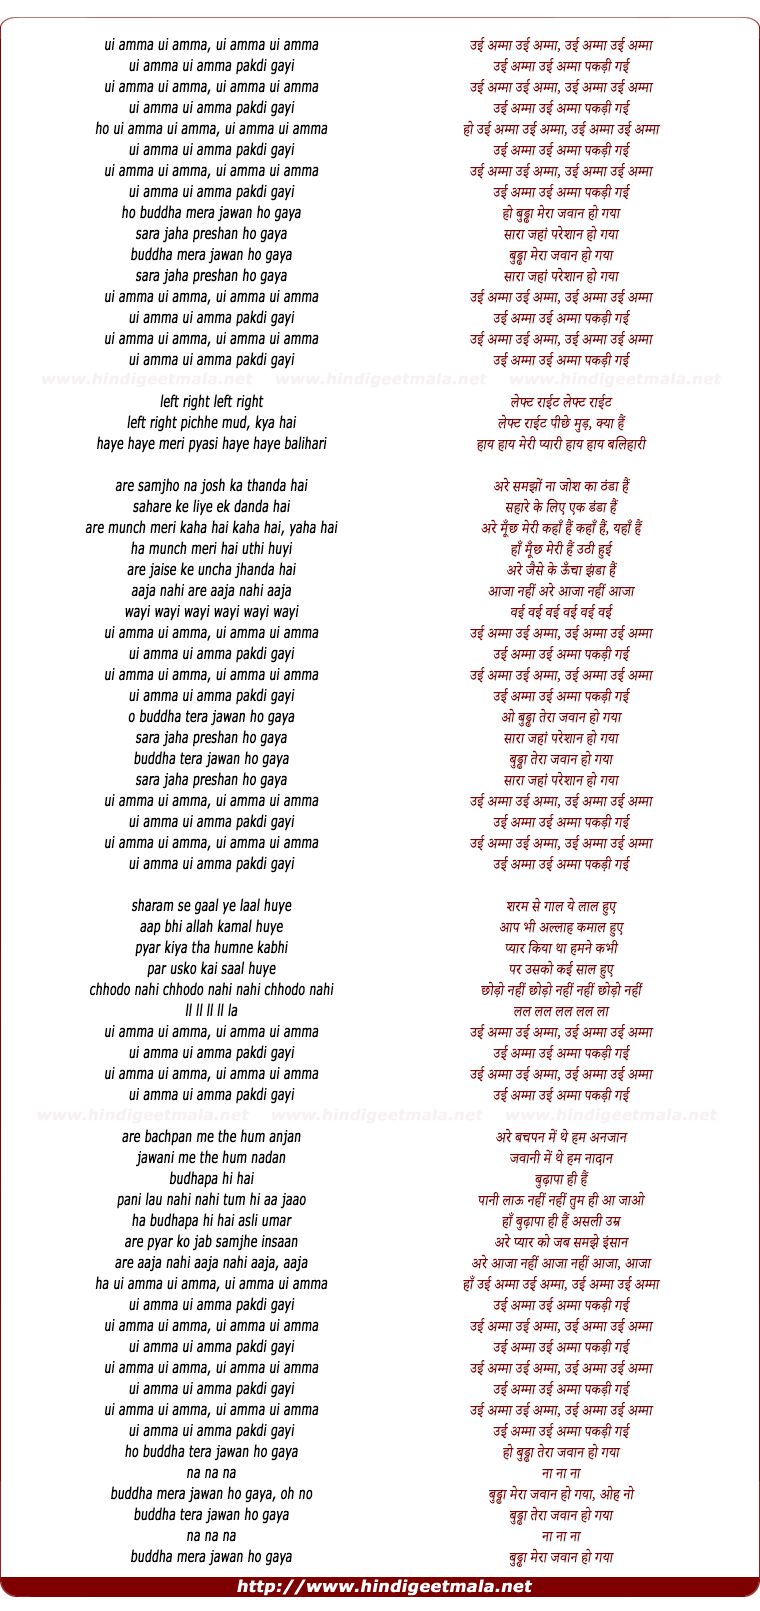 lyrics of song Ui Yamma Ui Yamma